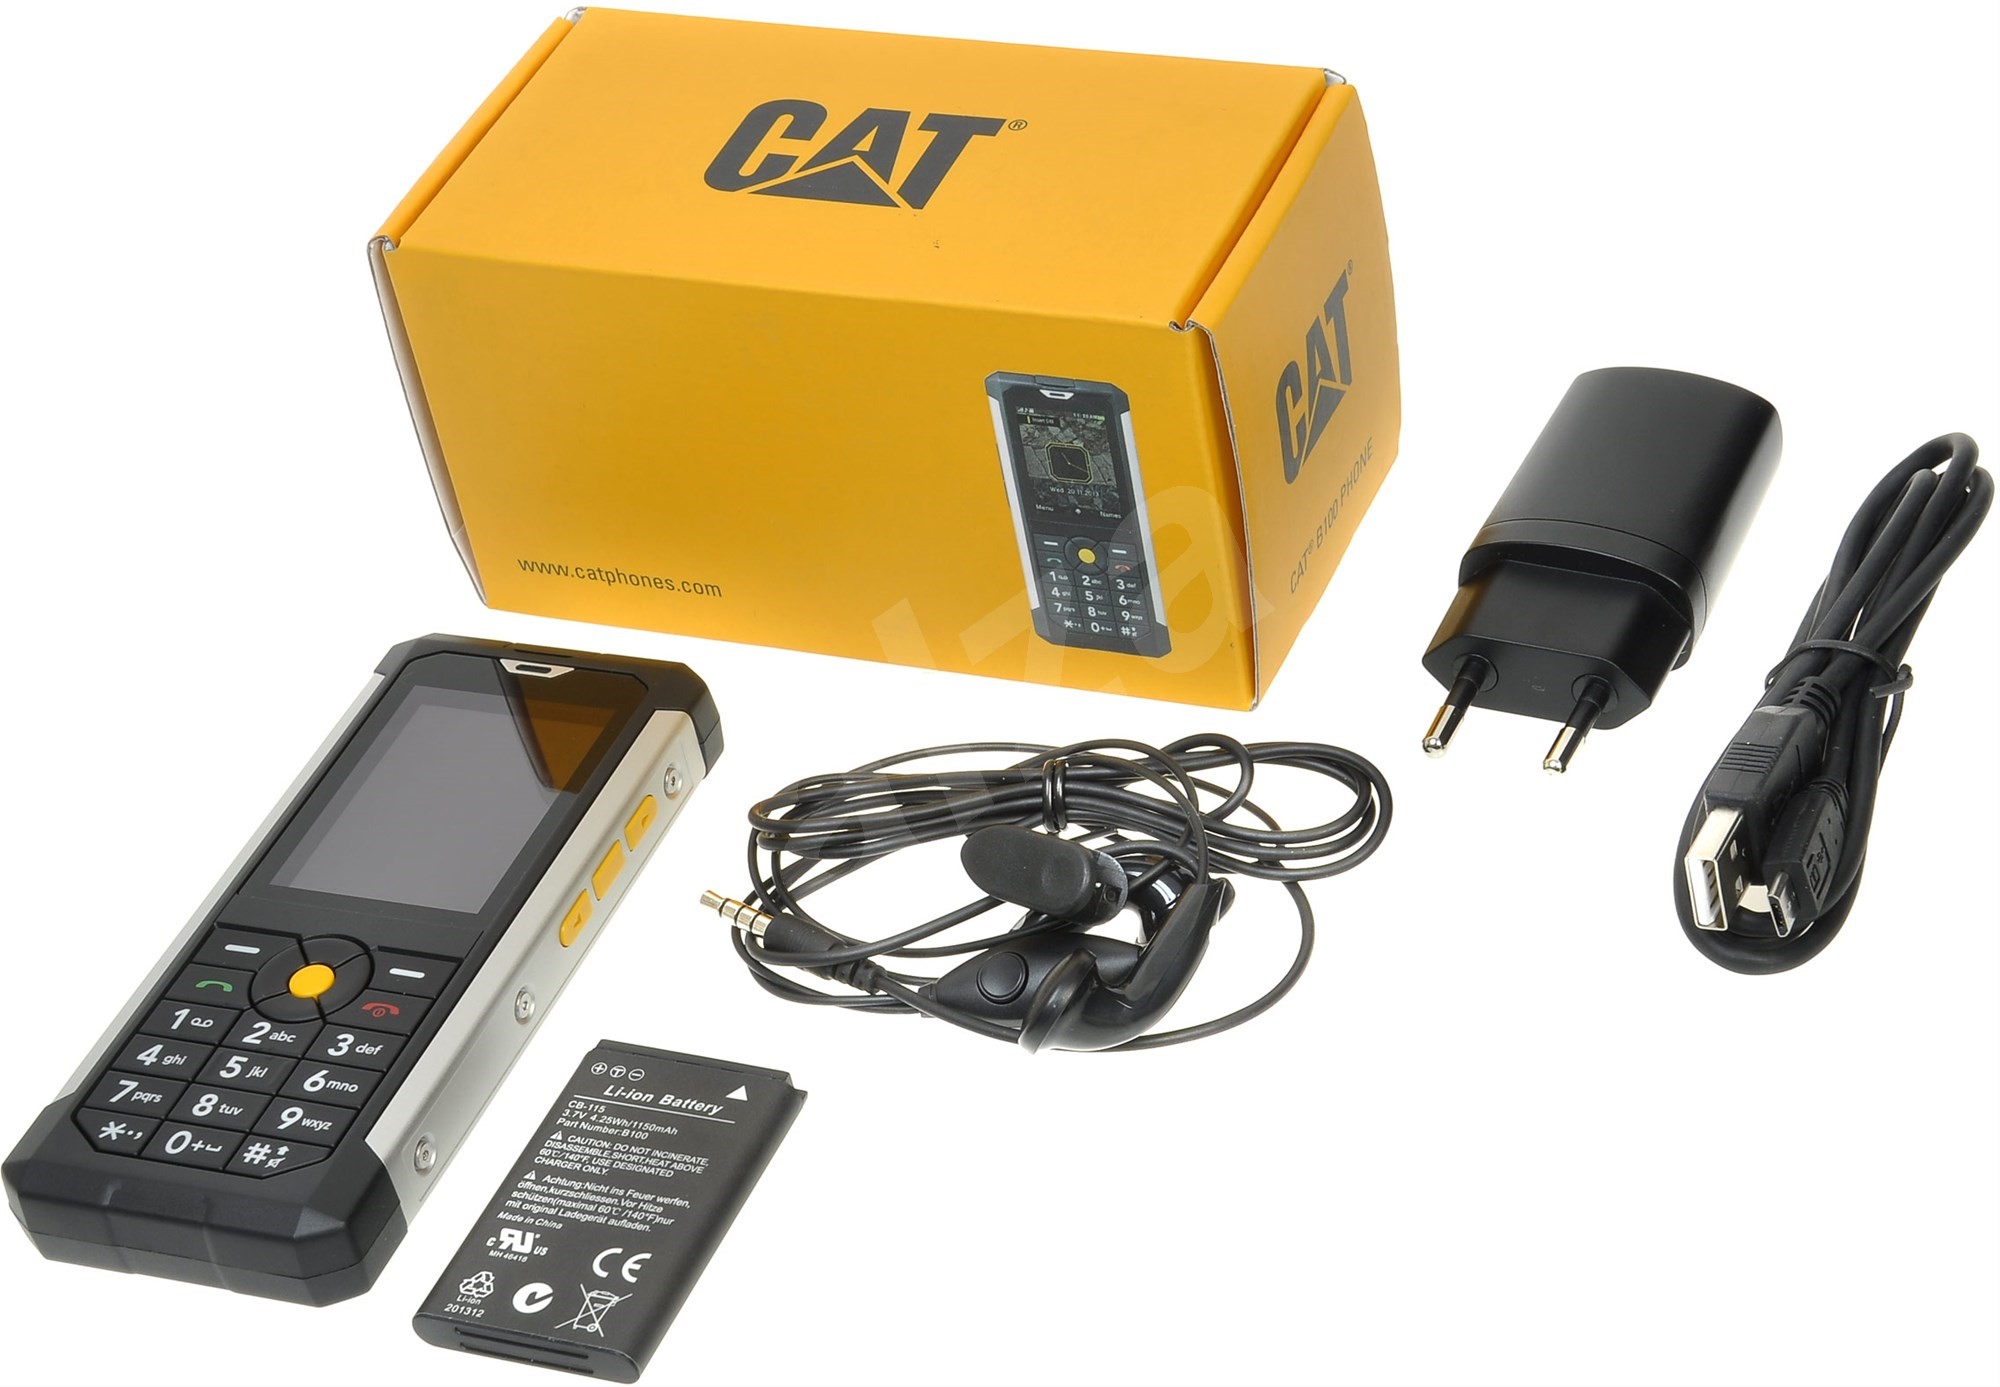  Caterpillar  CAT  B100  Mobile  Phone  Alzashop com